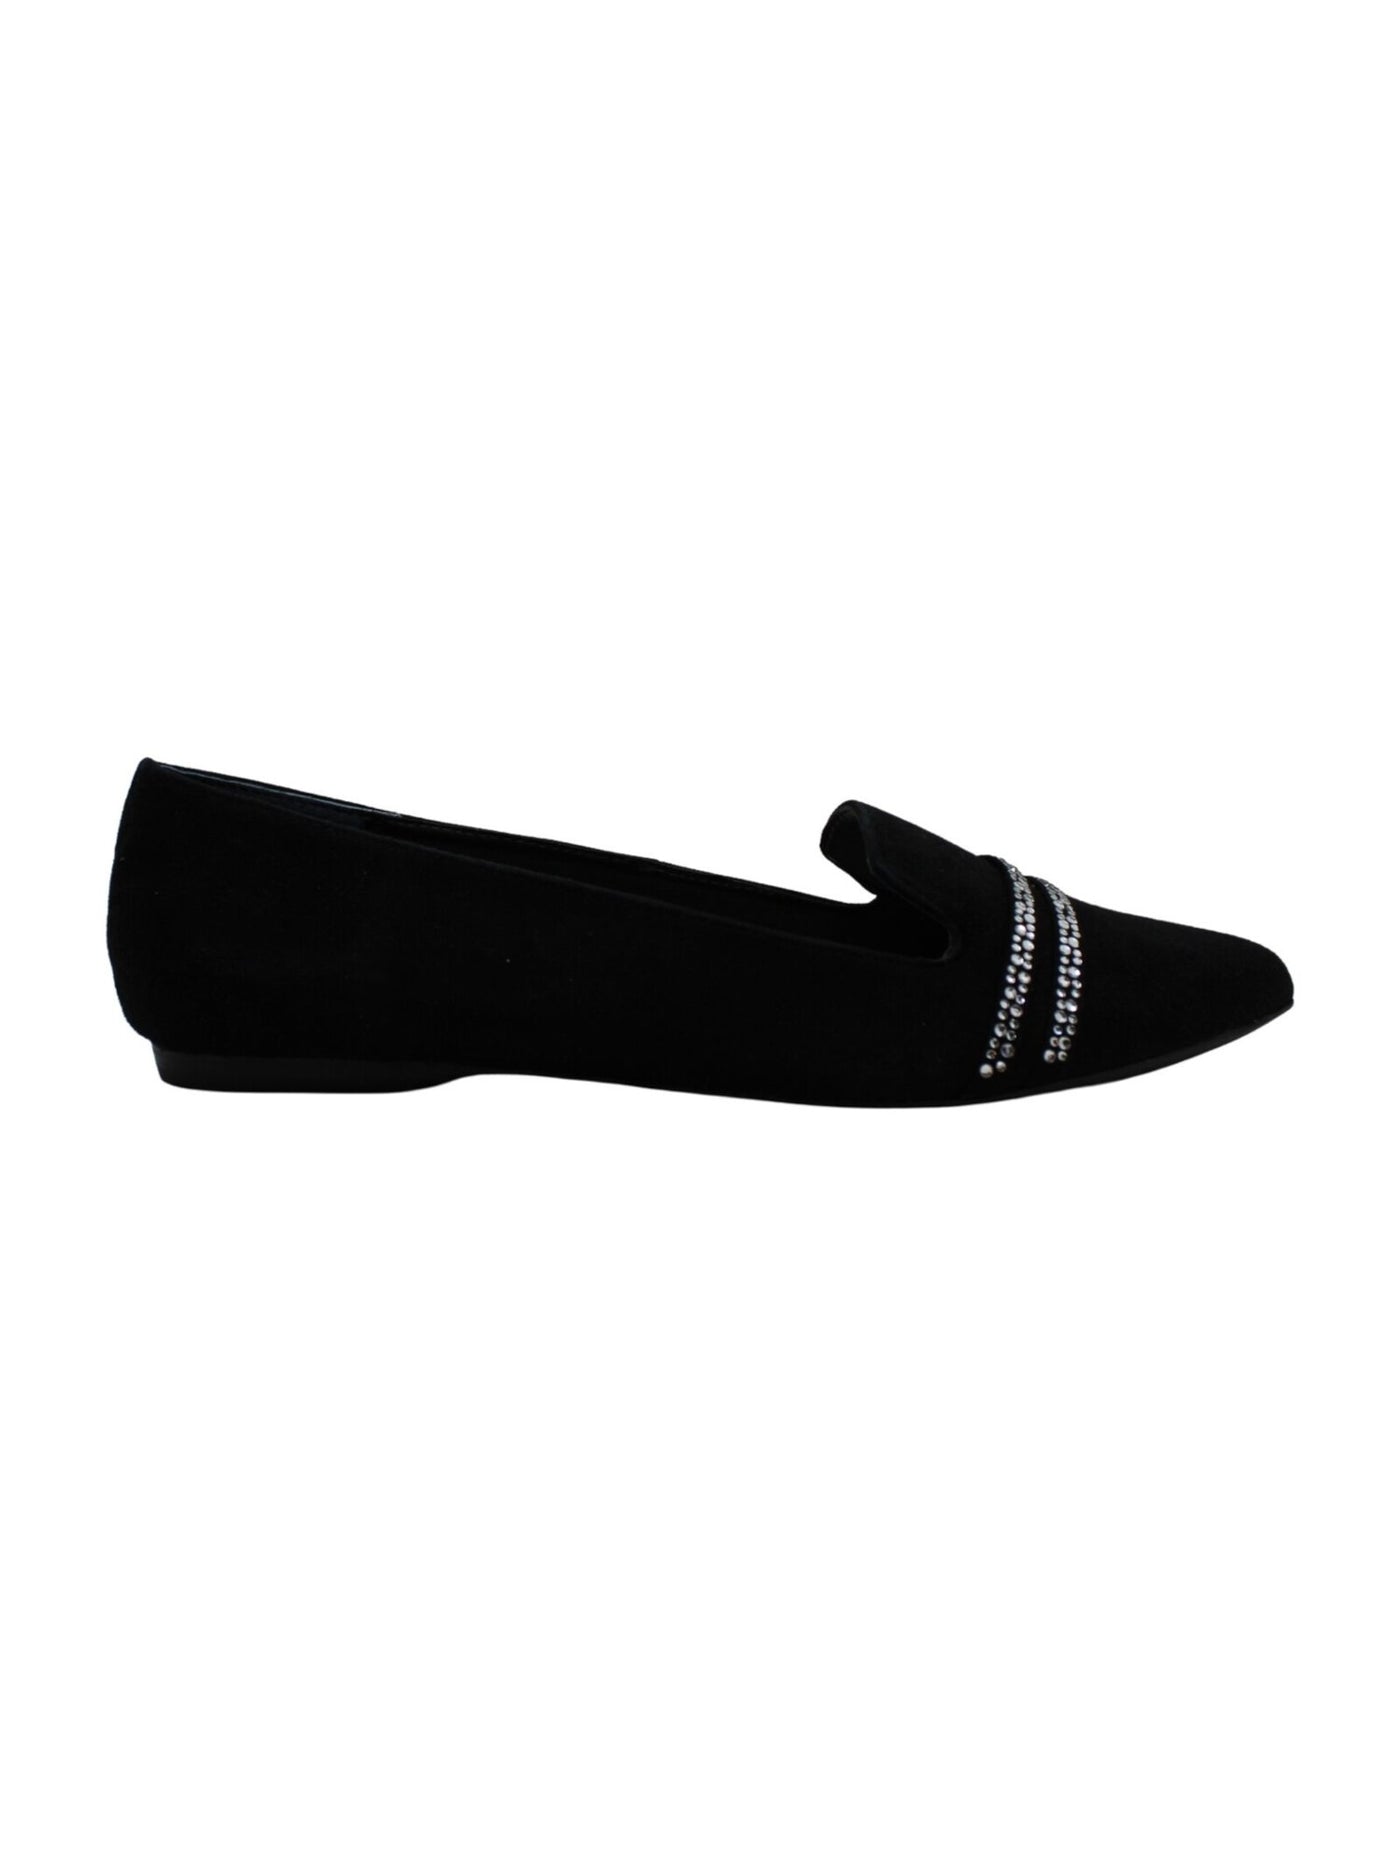 ALFANI Womens Black Step 'N Flex Technology Rhinestone Poee Pointed Toe Slip On Leather Loafers Shoes 6.5 M